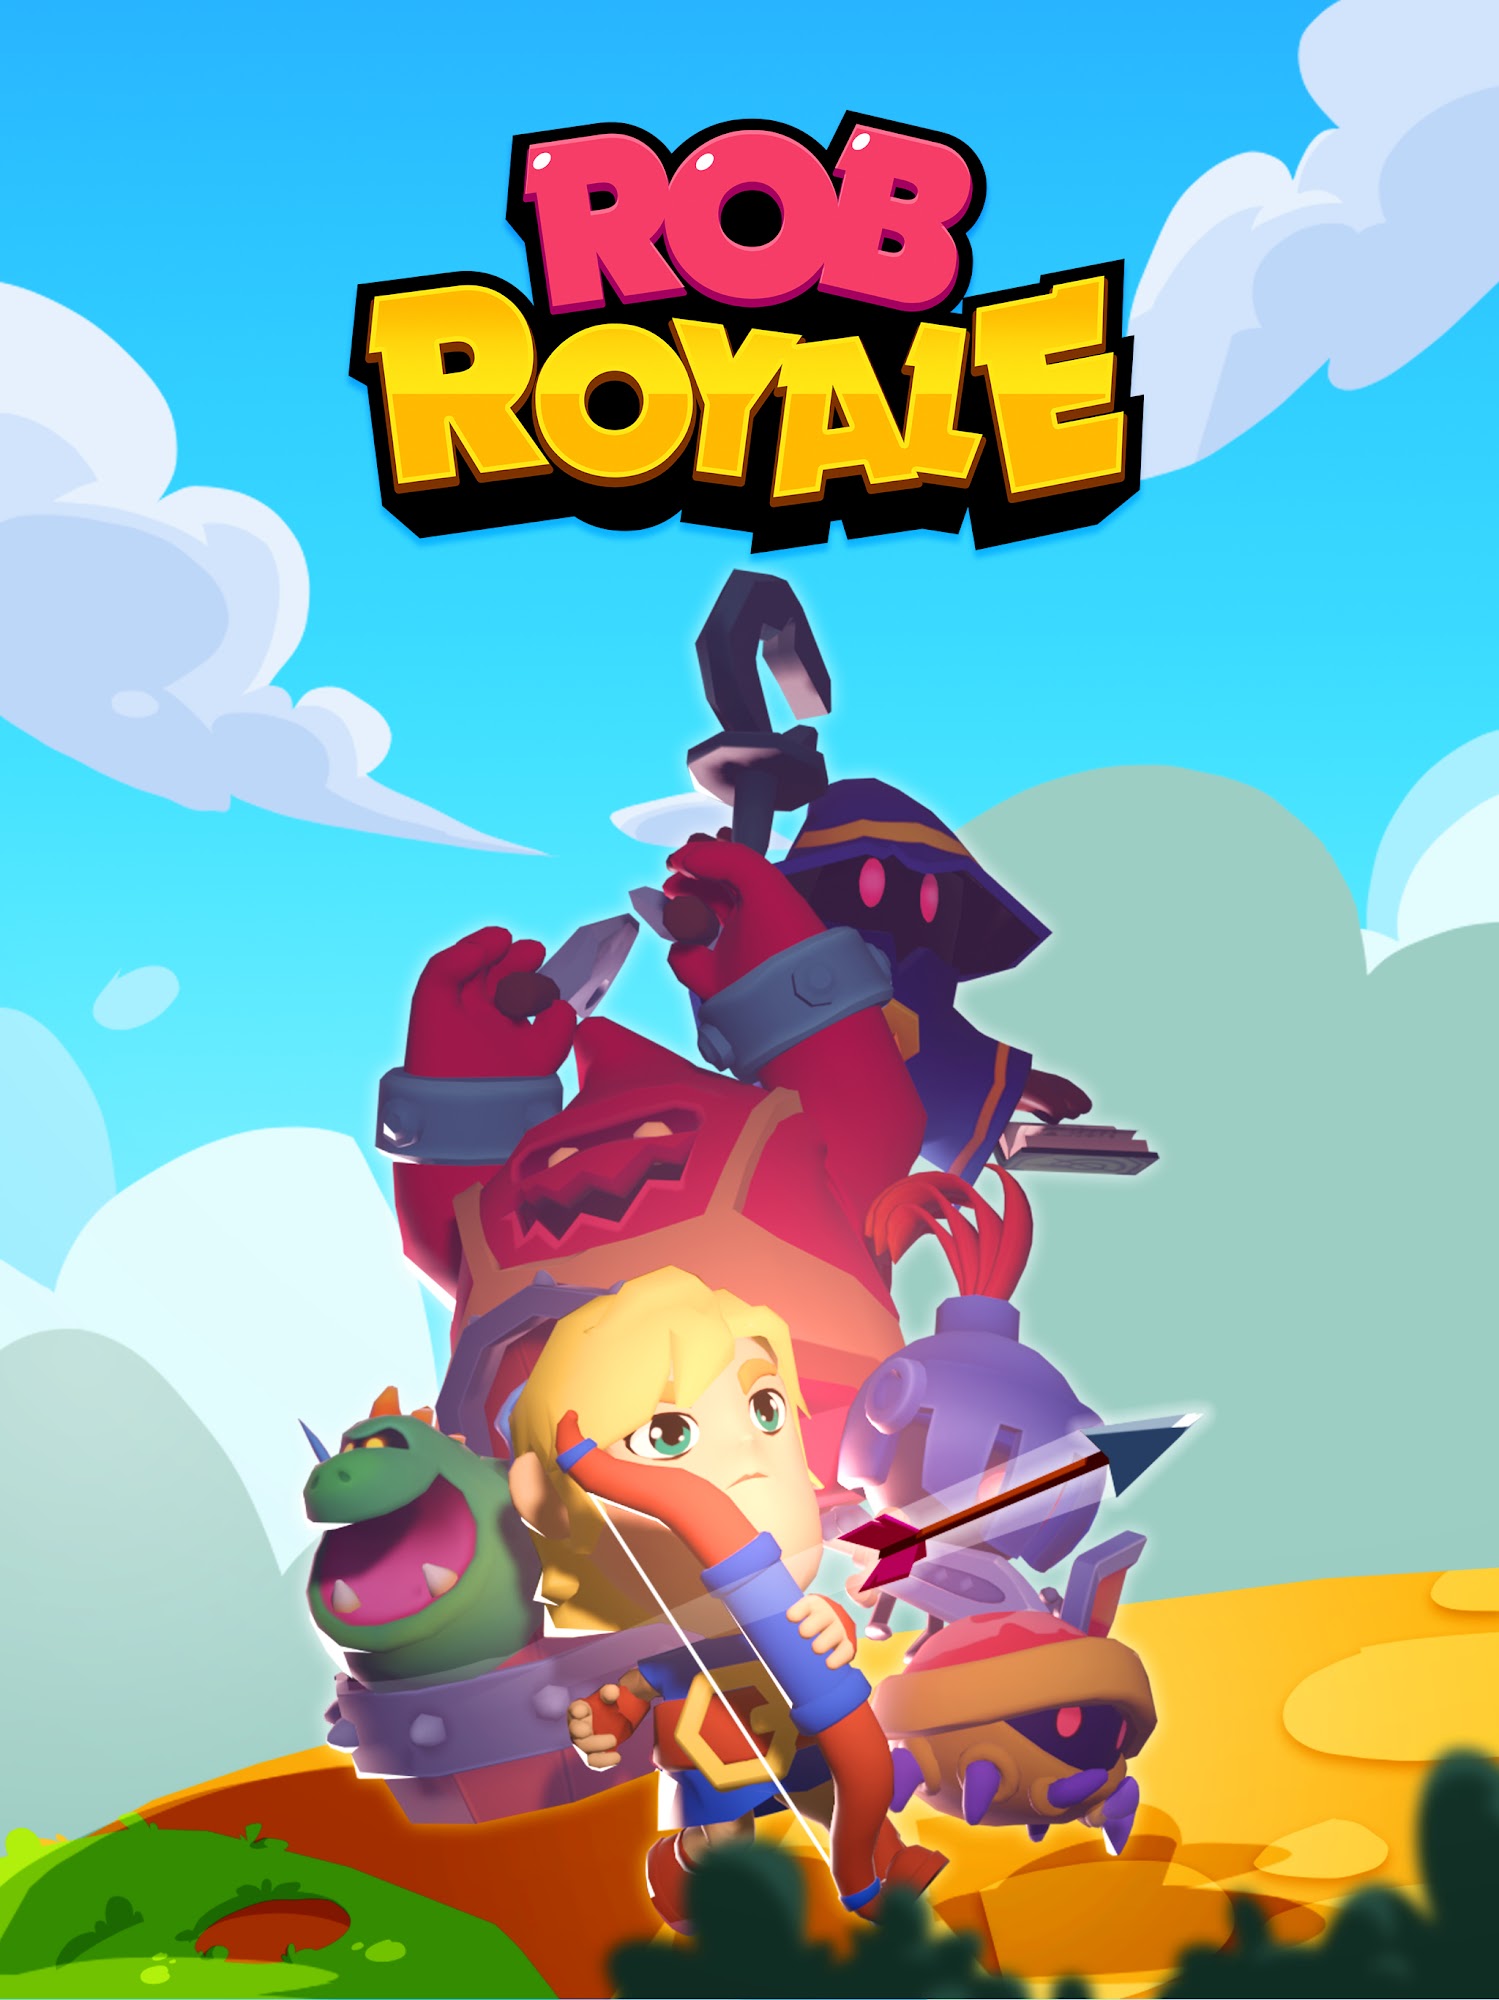 Descargar Rob Royale gratis para Android.